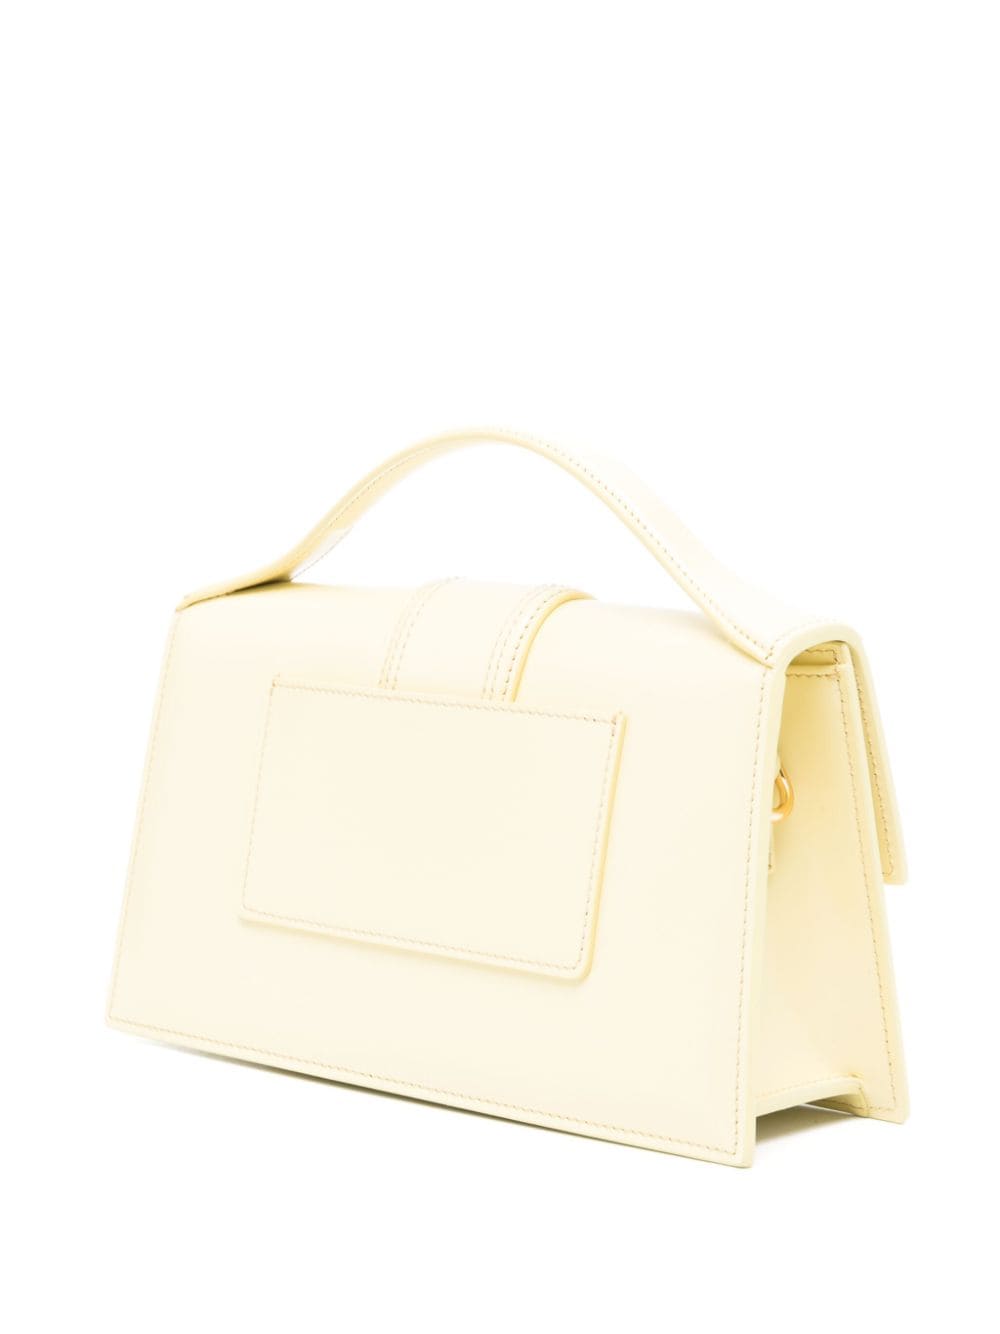 Pale Yellow Top-Handle Handbag by Le Grand Bambino